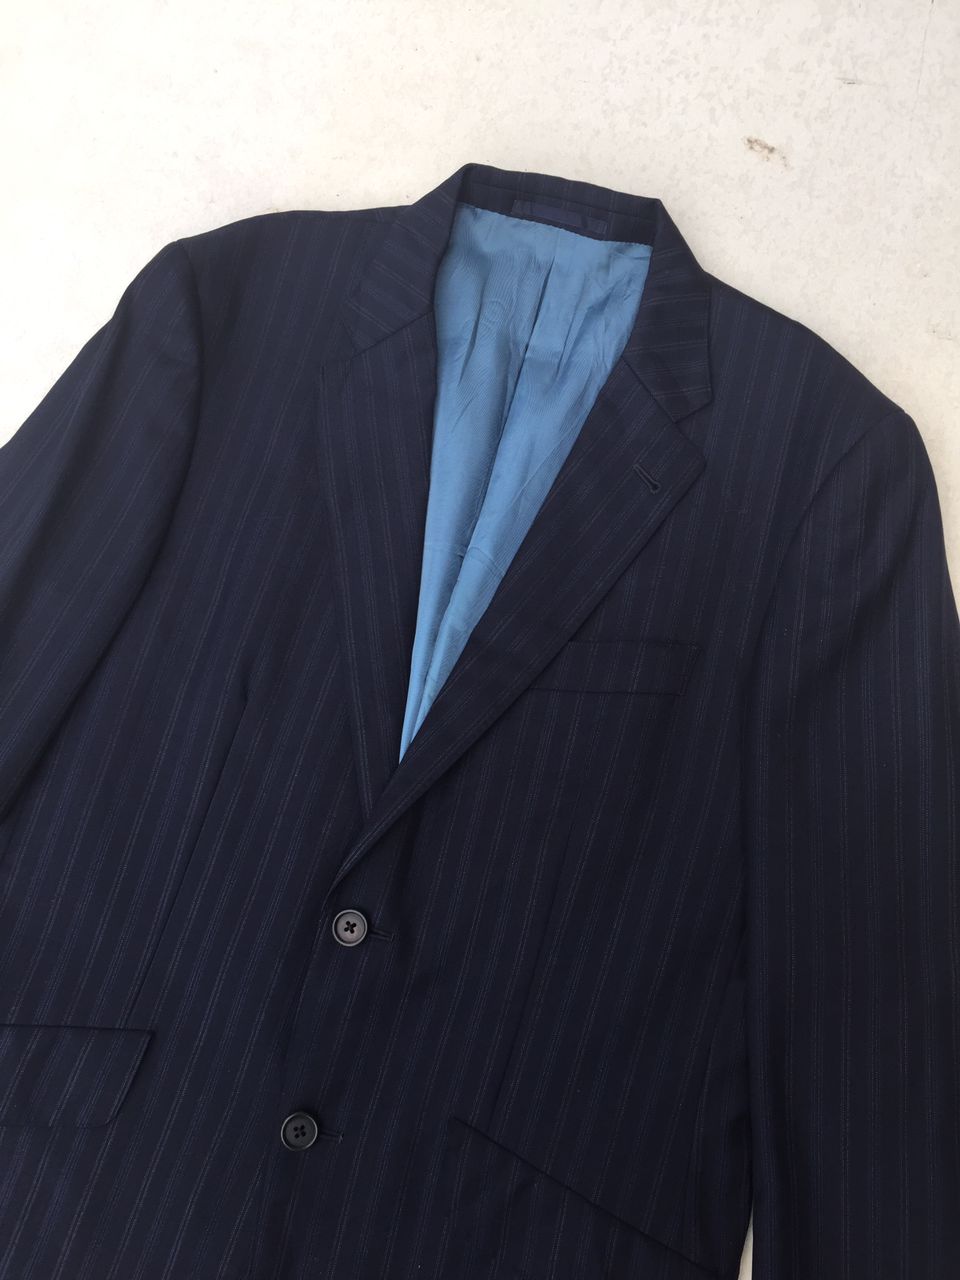 Paul Smith Loro Piana Blazer Suit stripe navy - 4